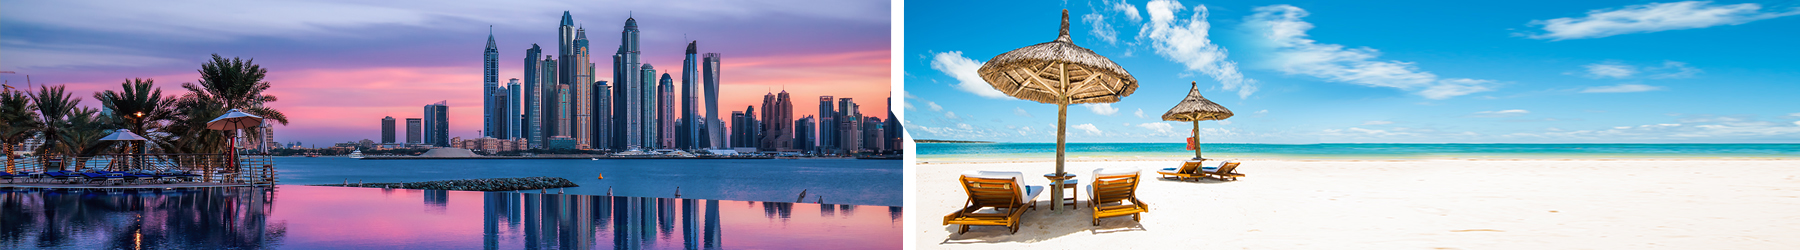 Luxury Dubai & All Inclusive Mauritius - 9 Nights